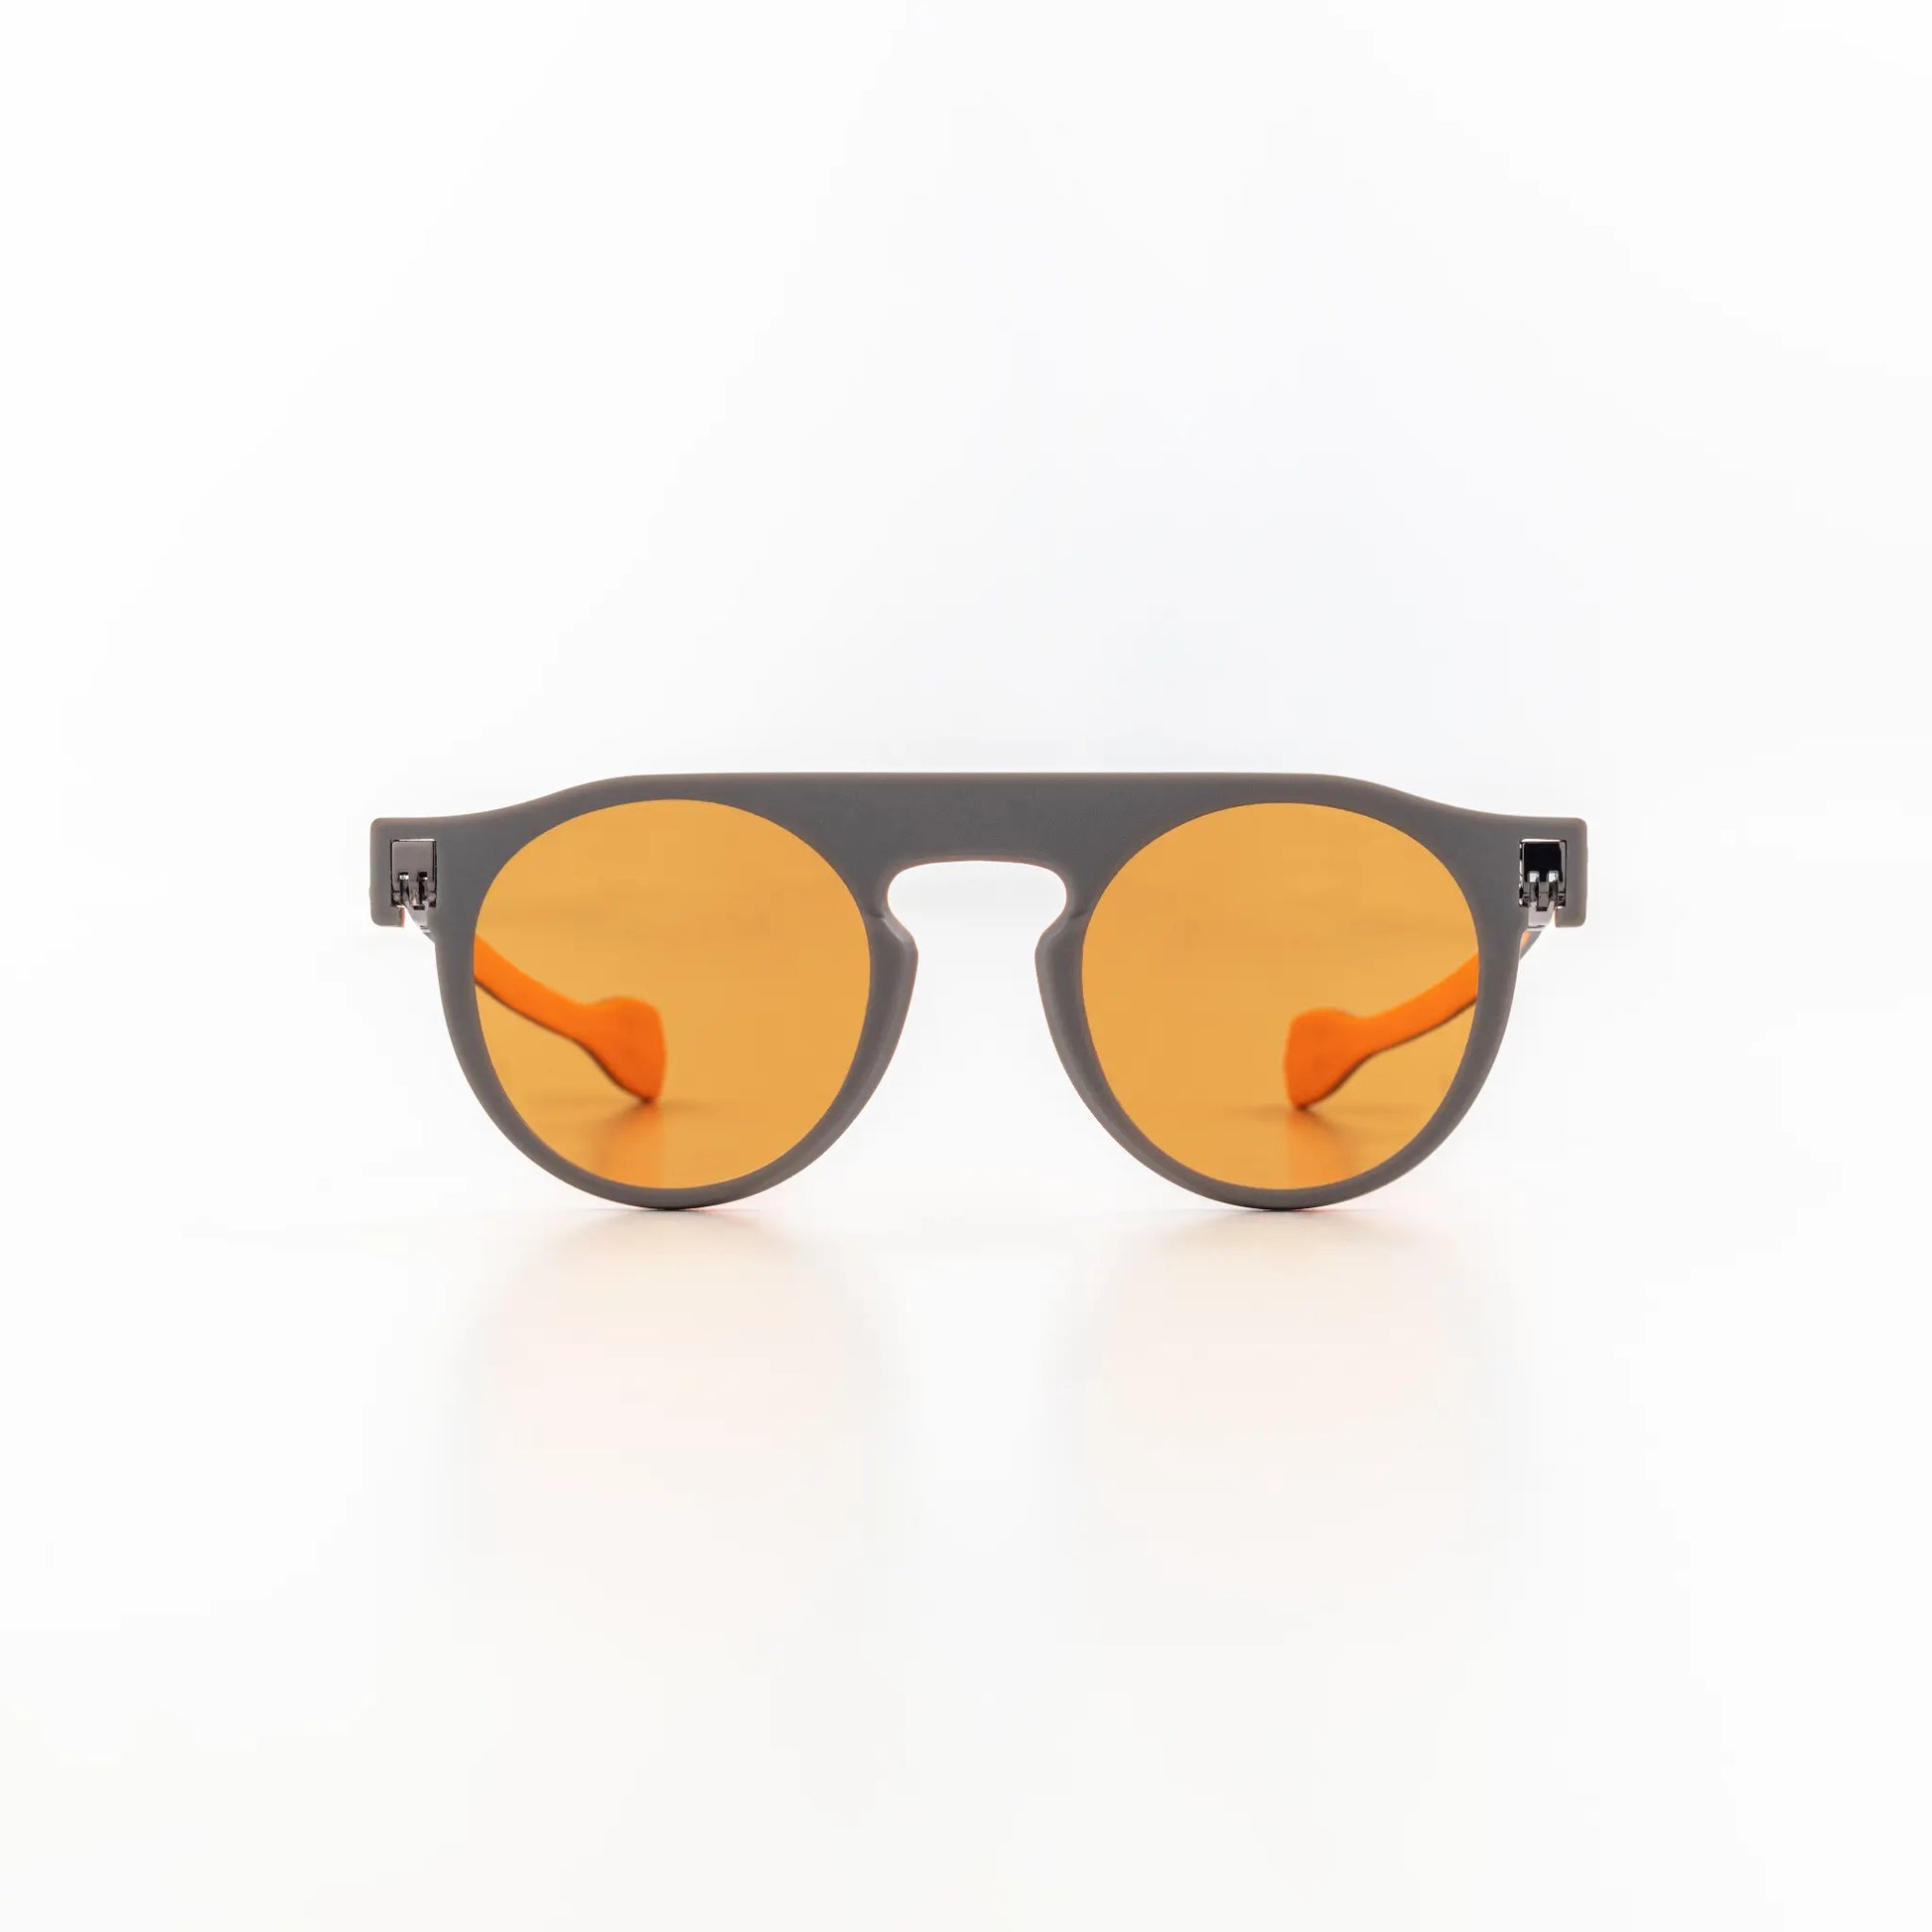 Reverso sunglasses grey & orange reversible & ultra light front view 2